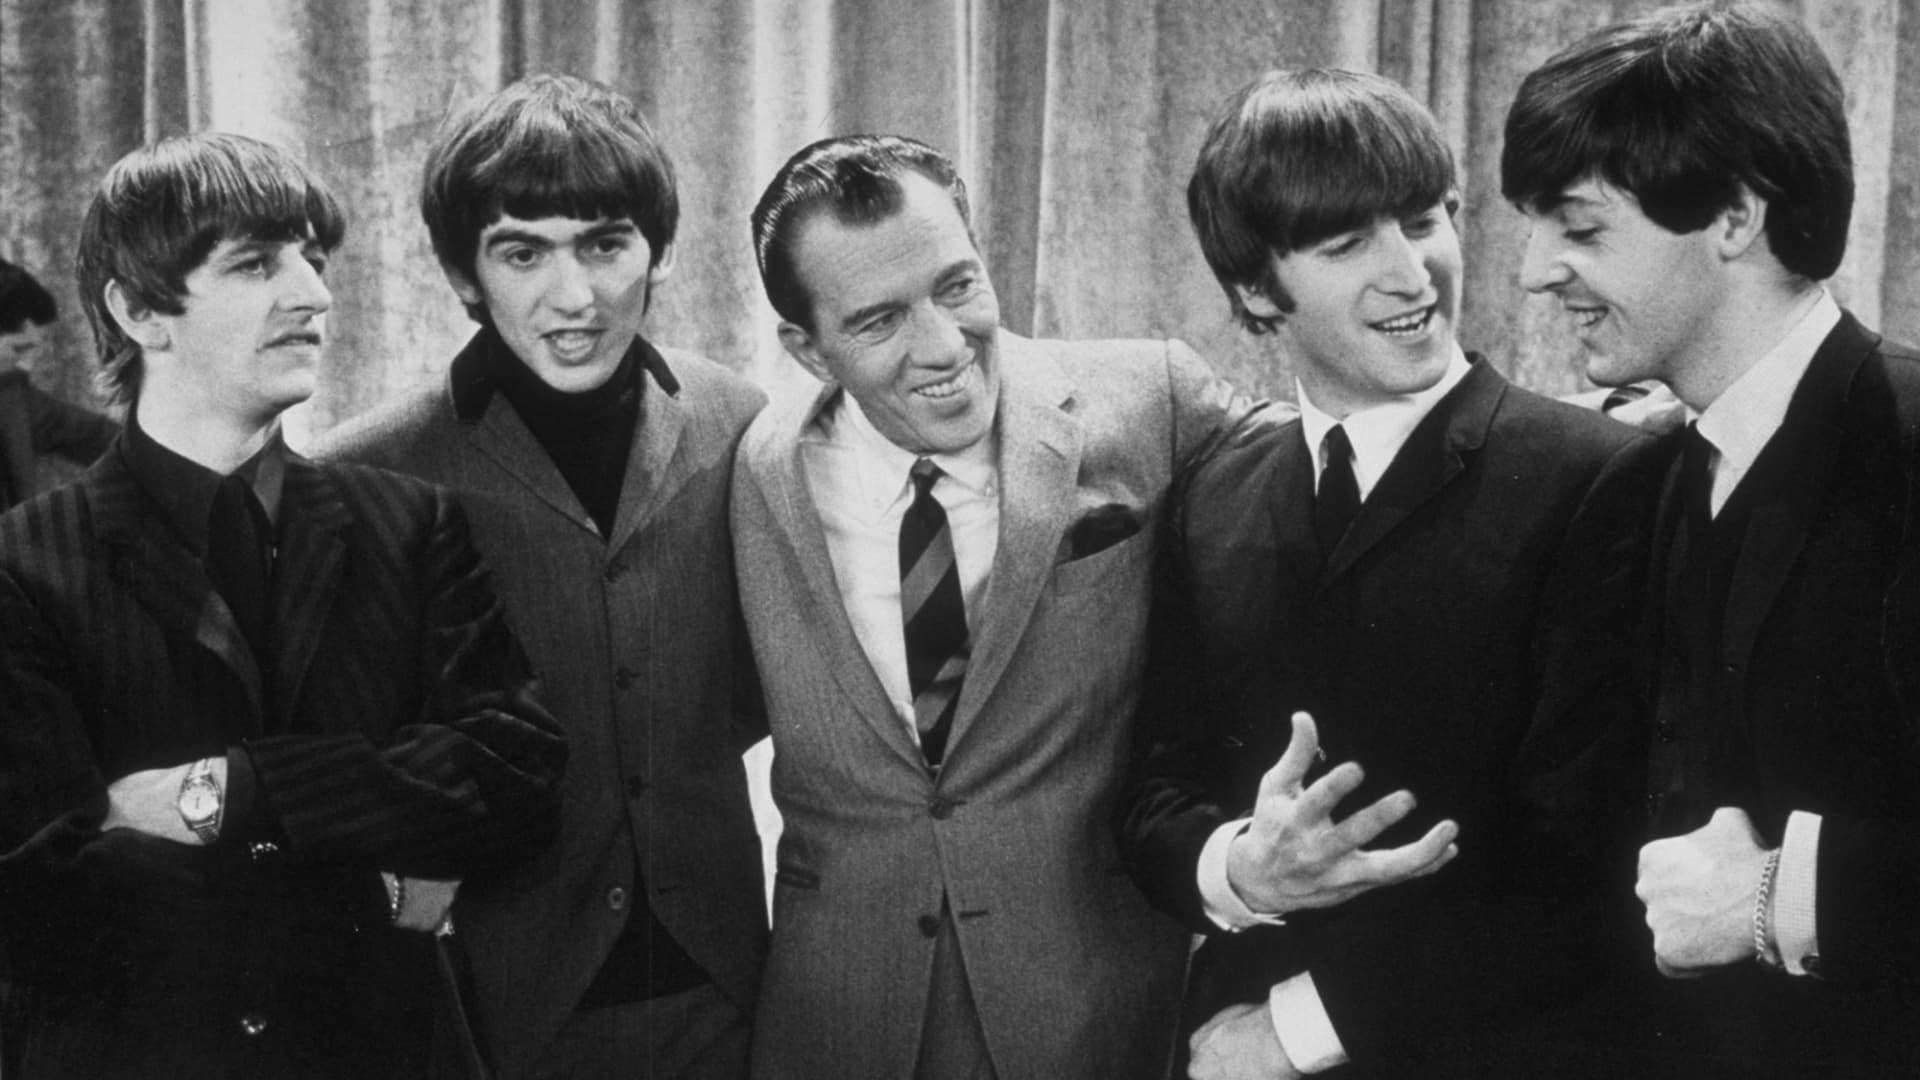 Beatles business: Still making money, 50 years on